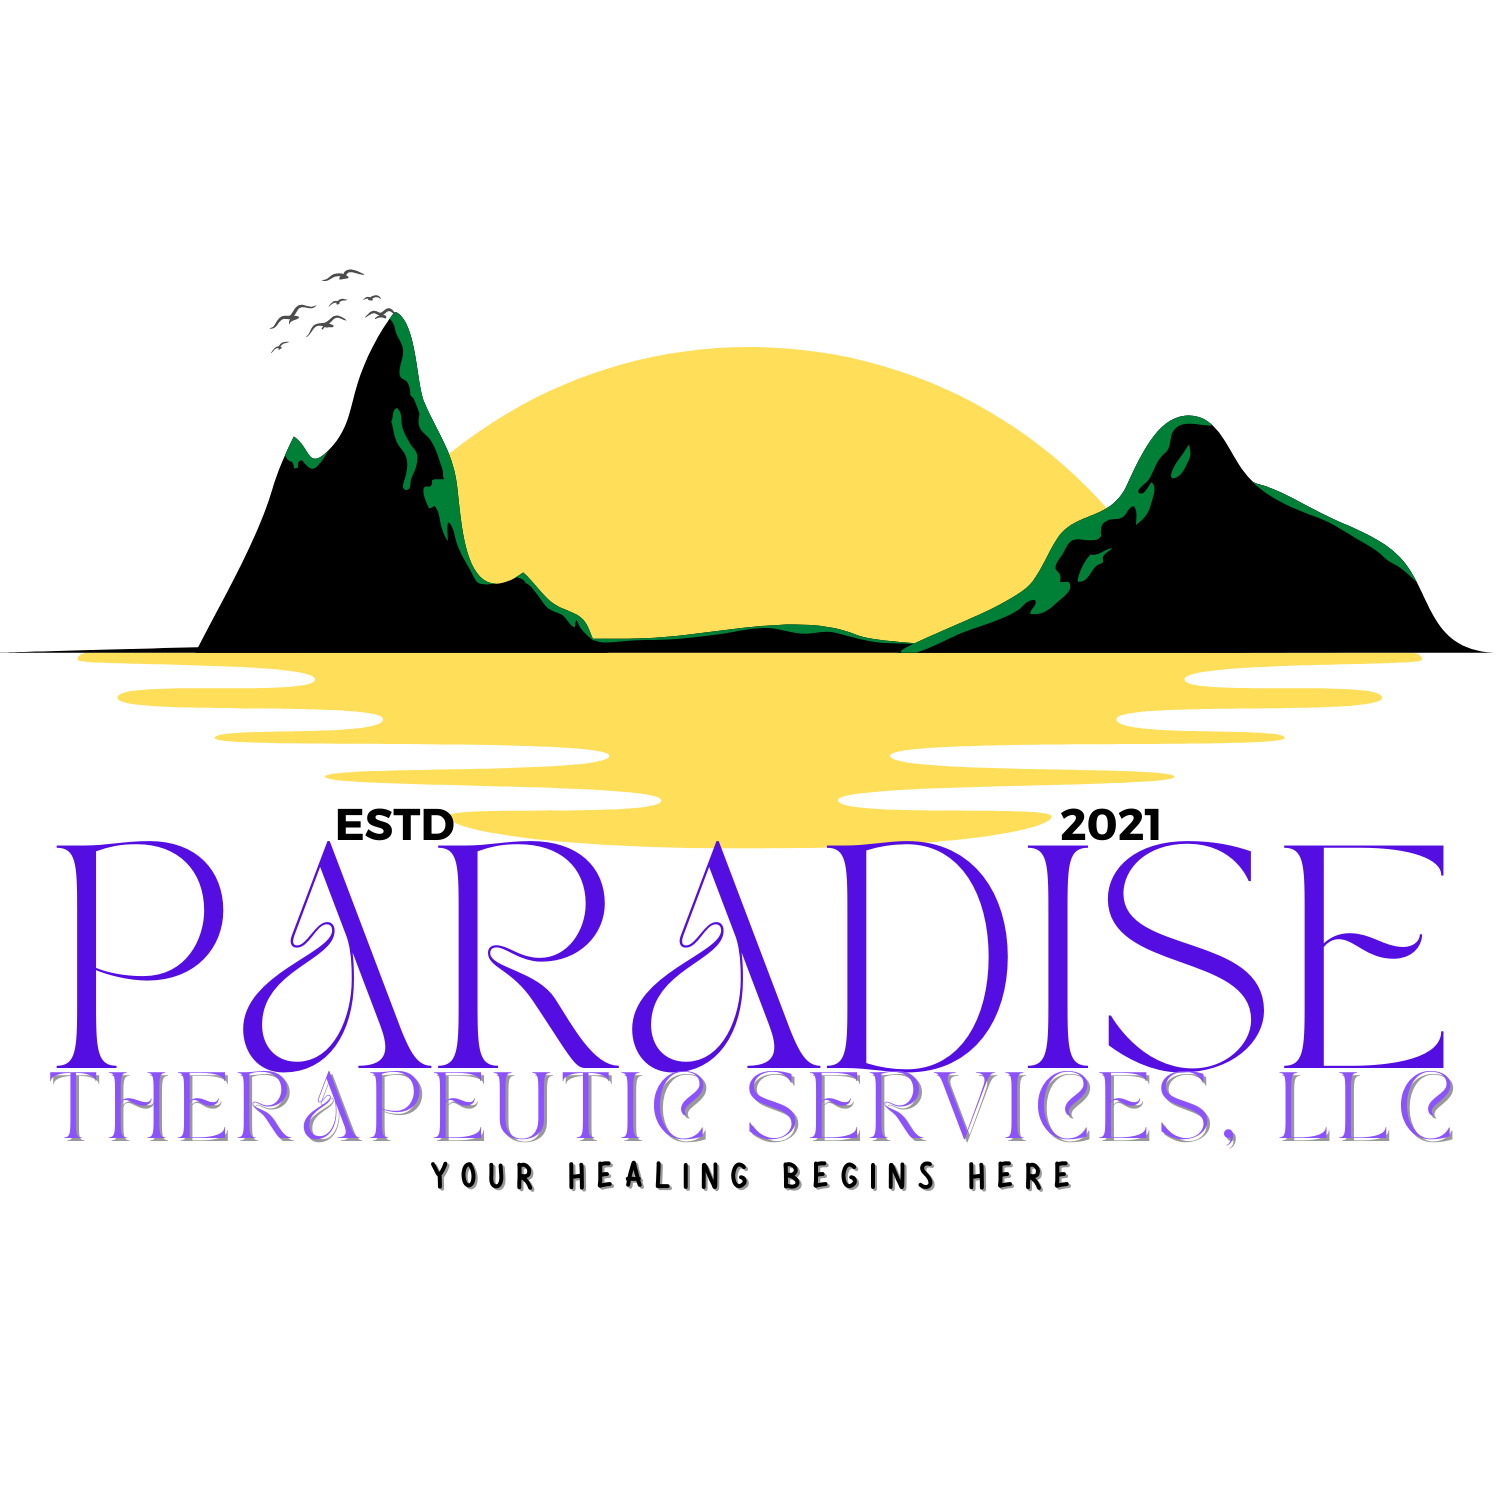 PARADISE THERAPEUTIC SERVICES, LLC.